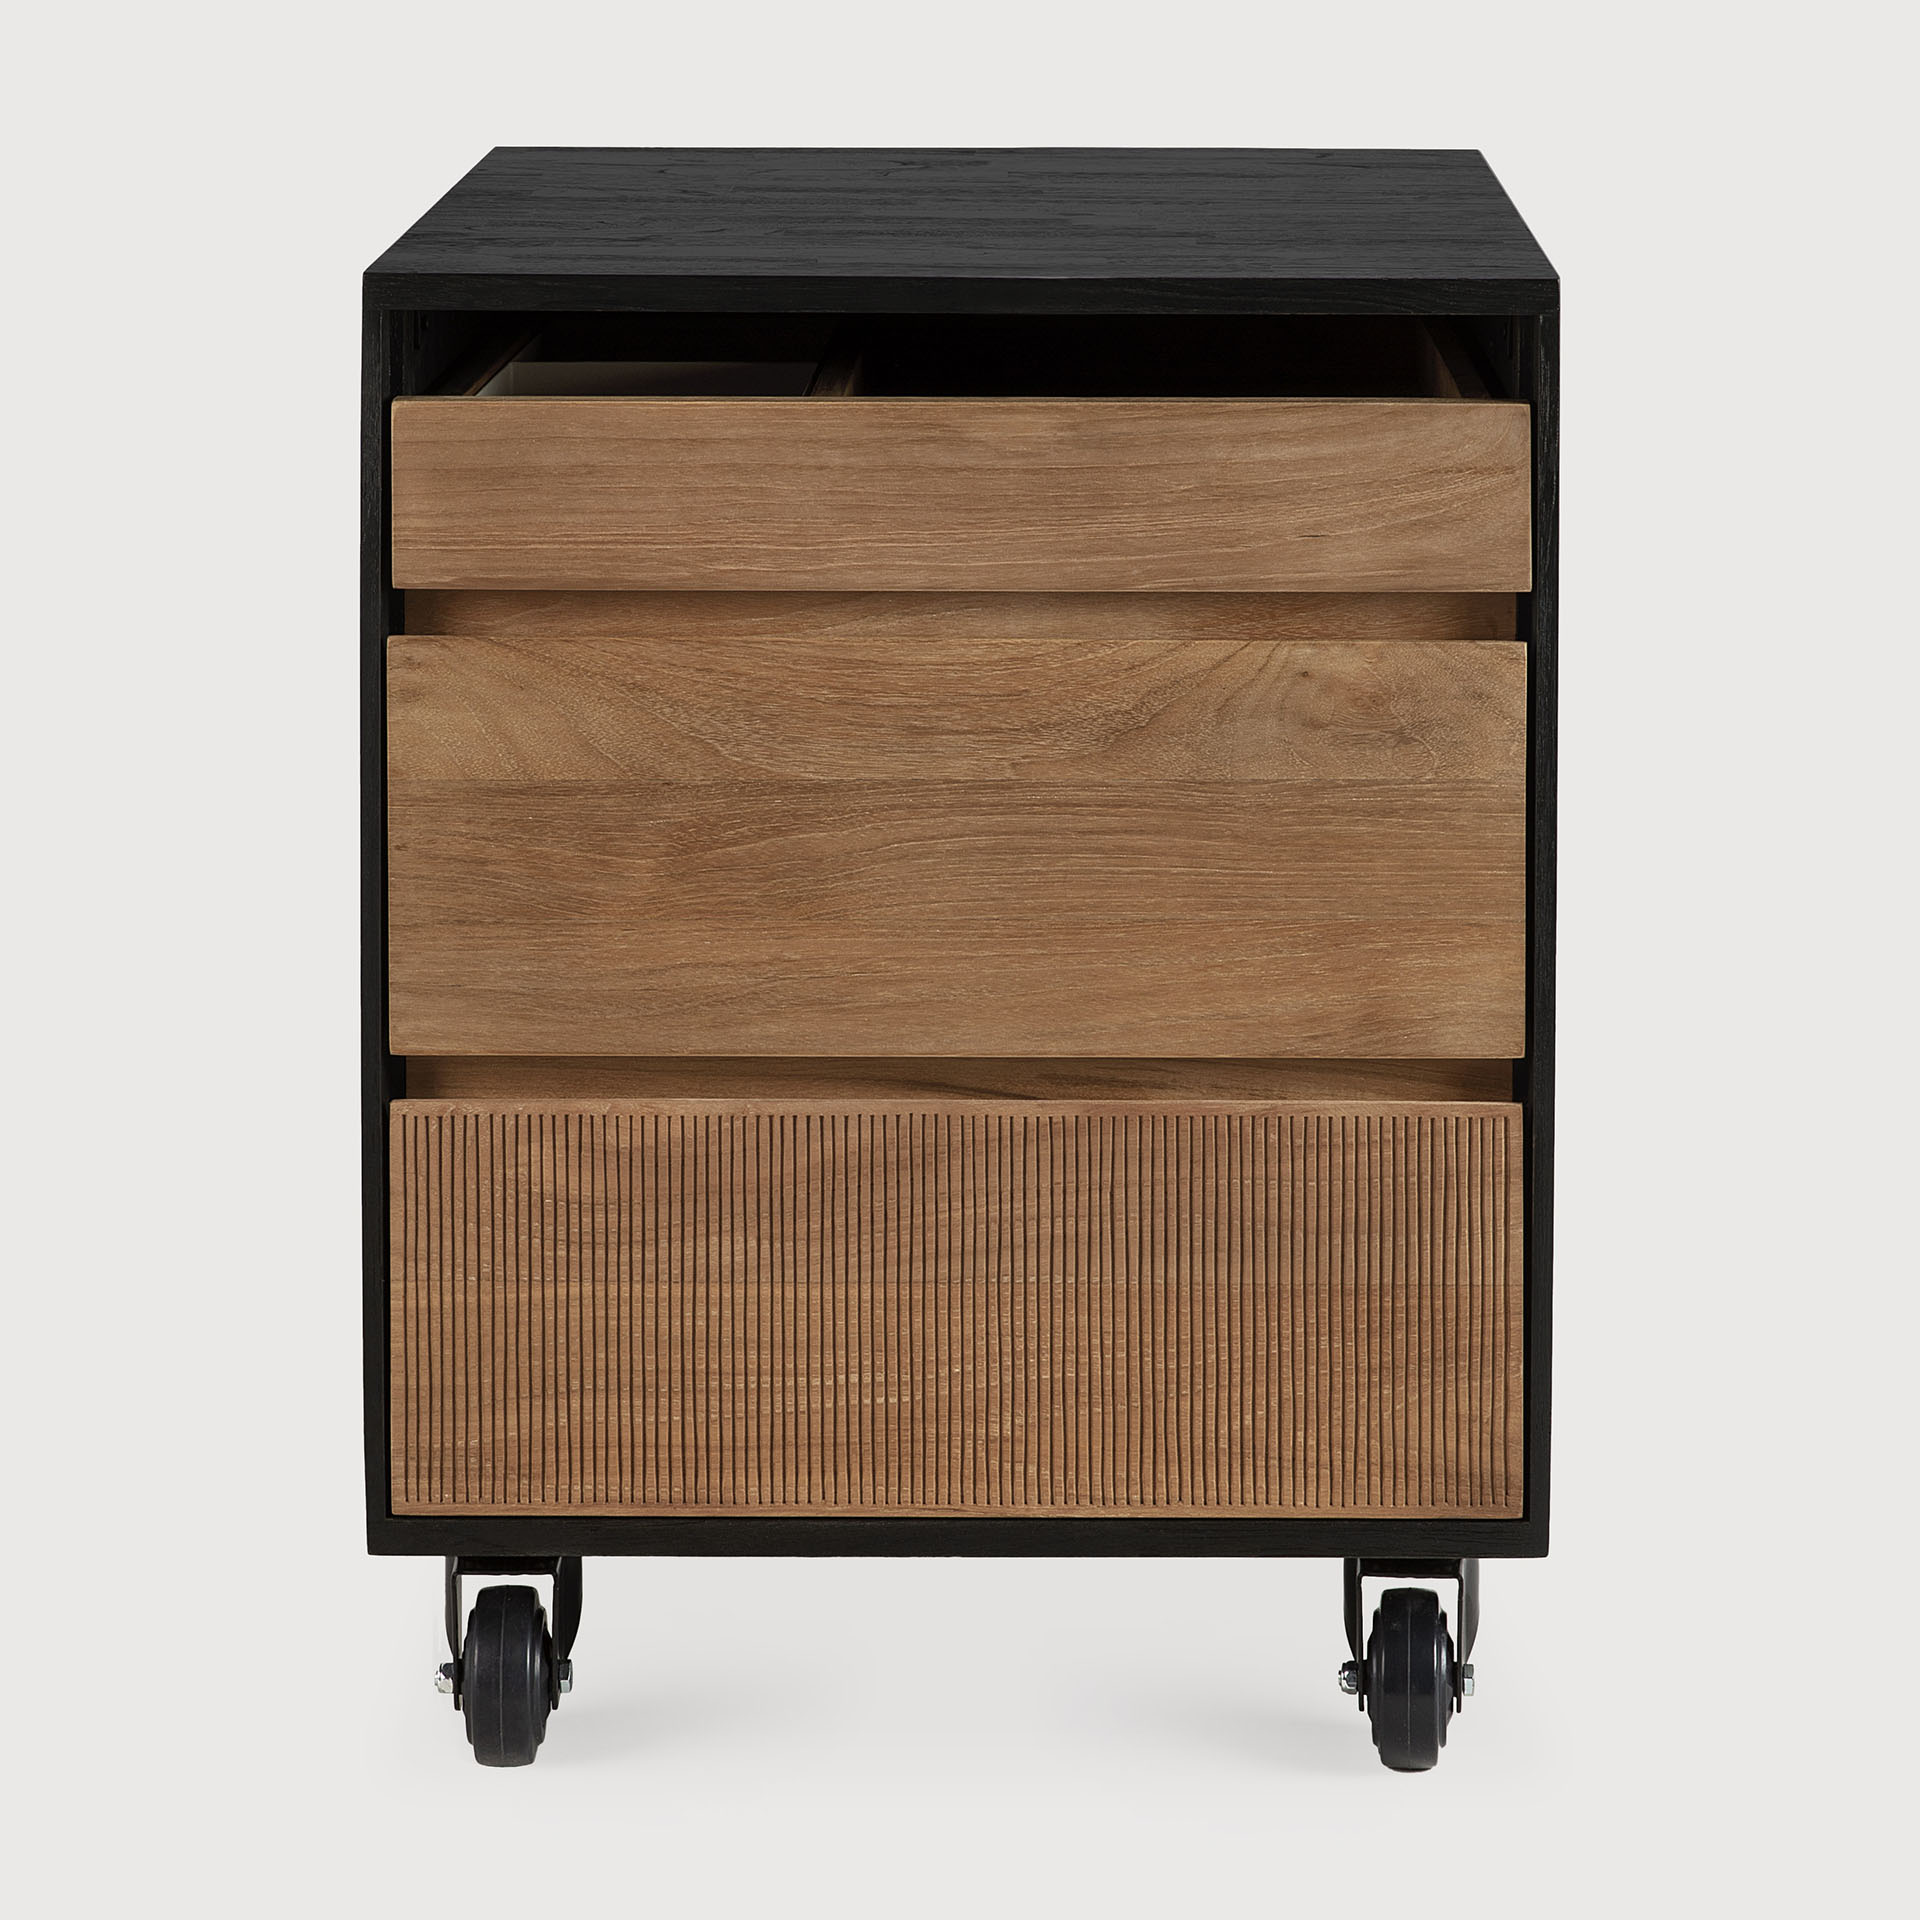 [10137] Oscar drawer unit - 3 drawers